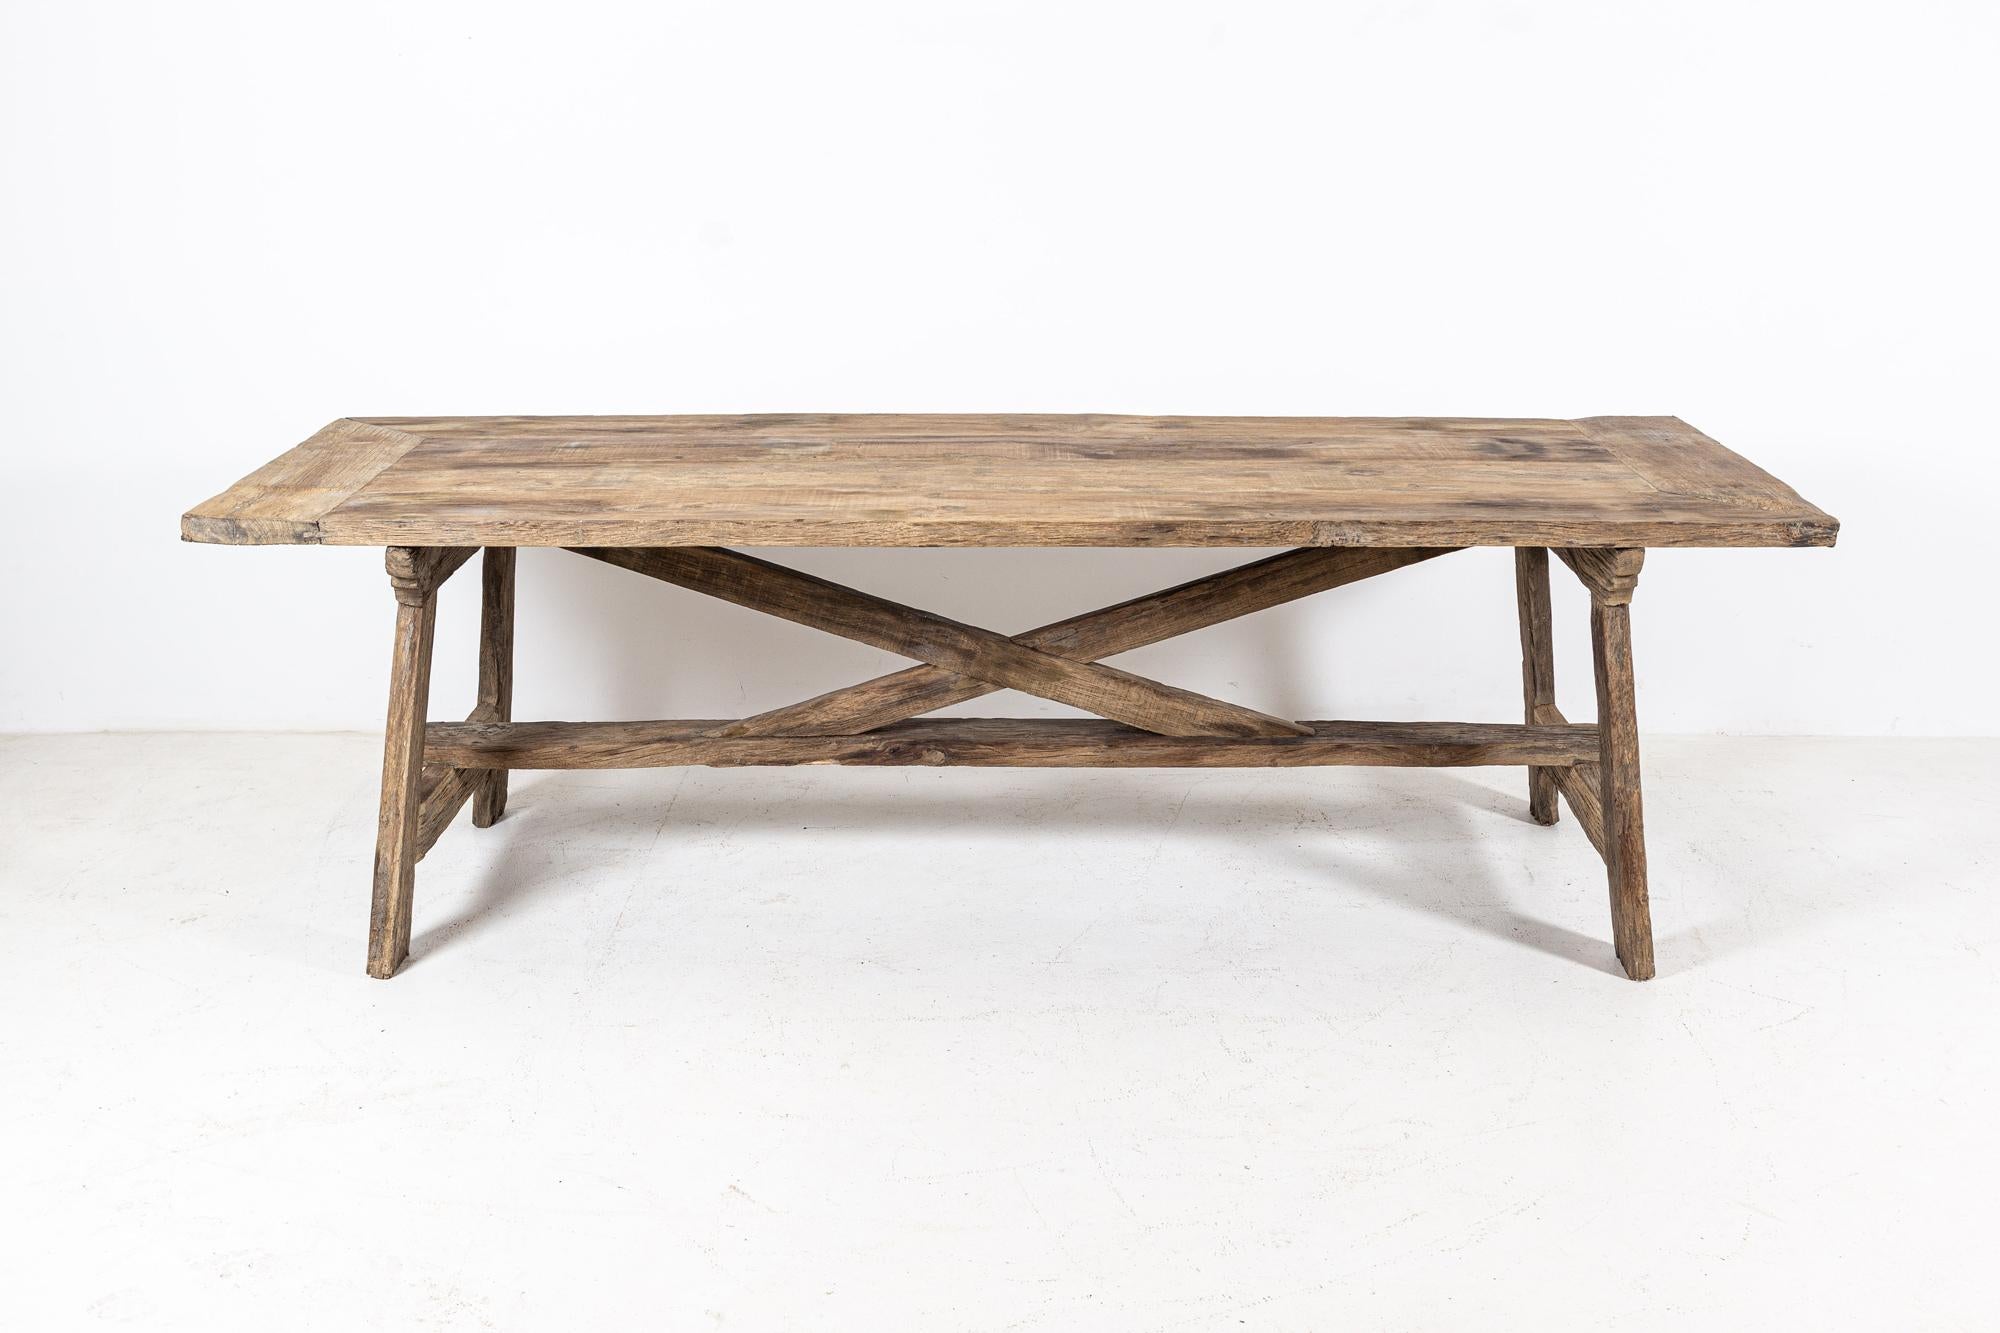 Circa 1840

19thC Spanish rustic oak bleached farmhouse table

W251 x D90 x H78 cm 
Apron 74 cm 
Leg to leg inside 200 cm